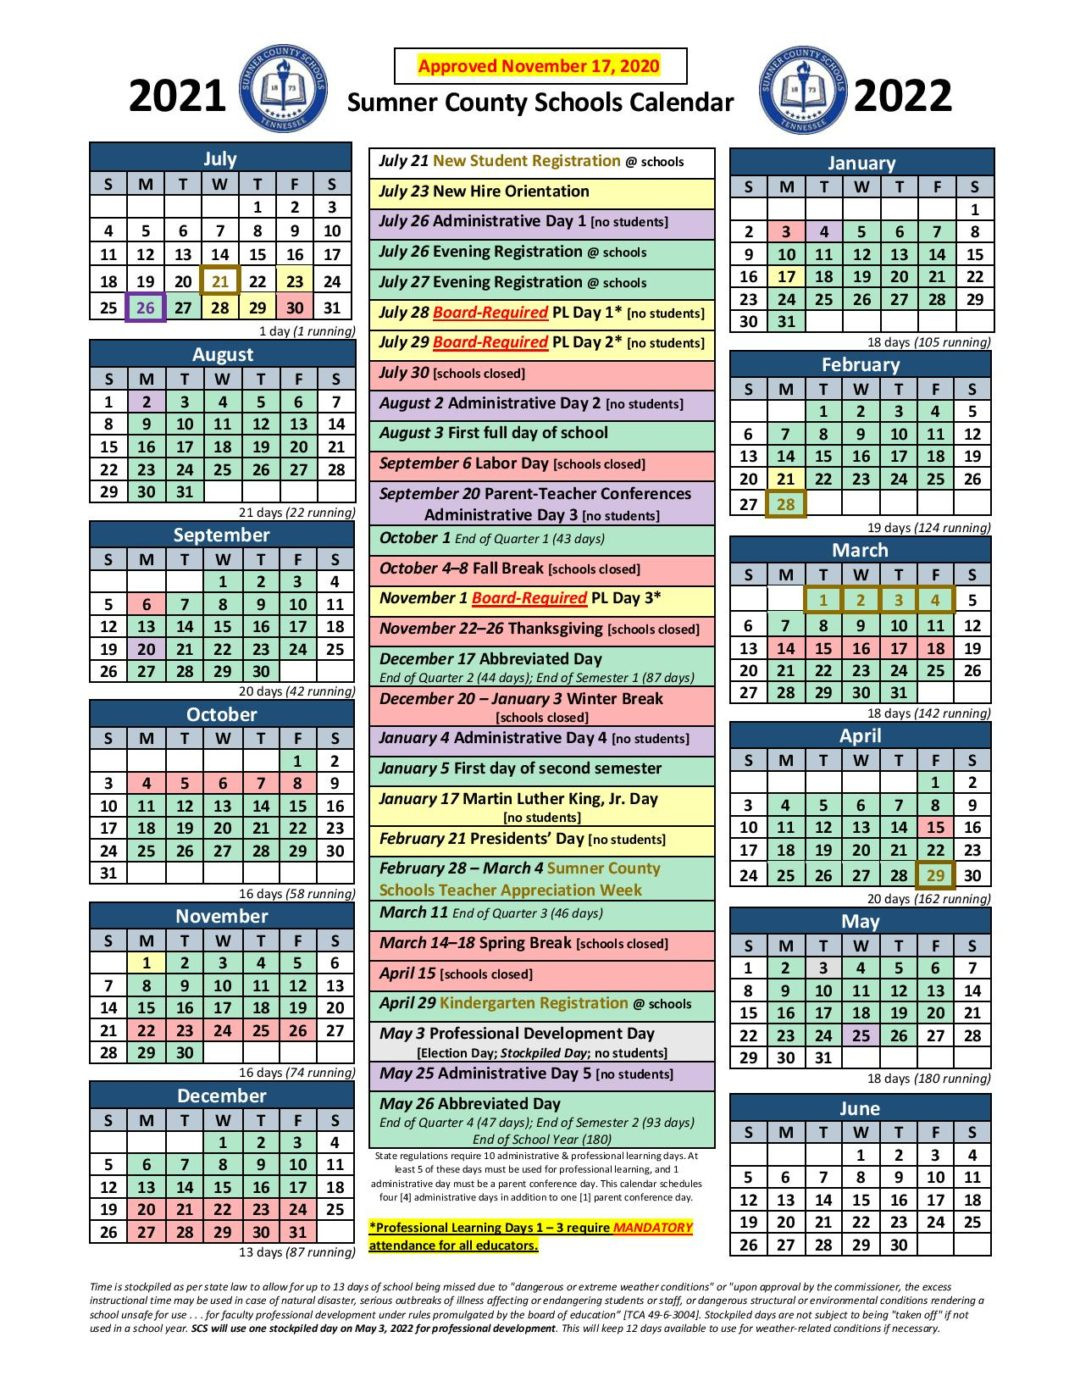 Sumner County School Calendar Holidays 2021-2022-2022 Calendar With Holidays Printable Usa